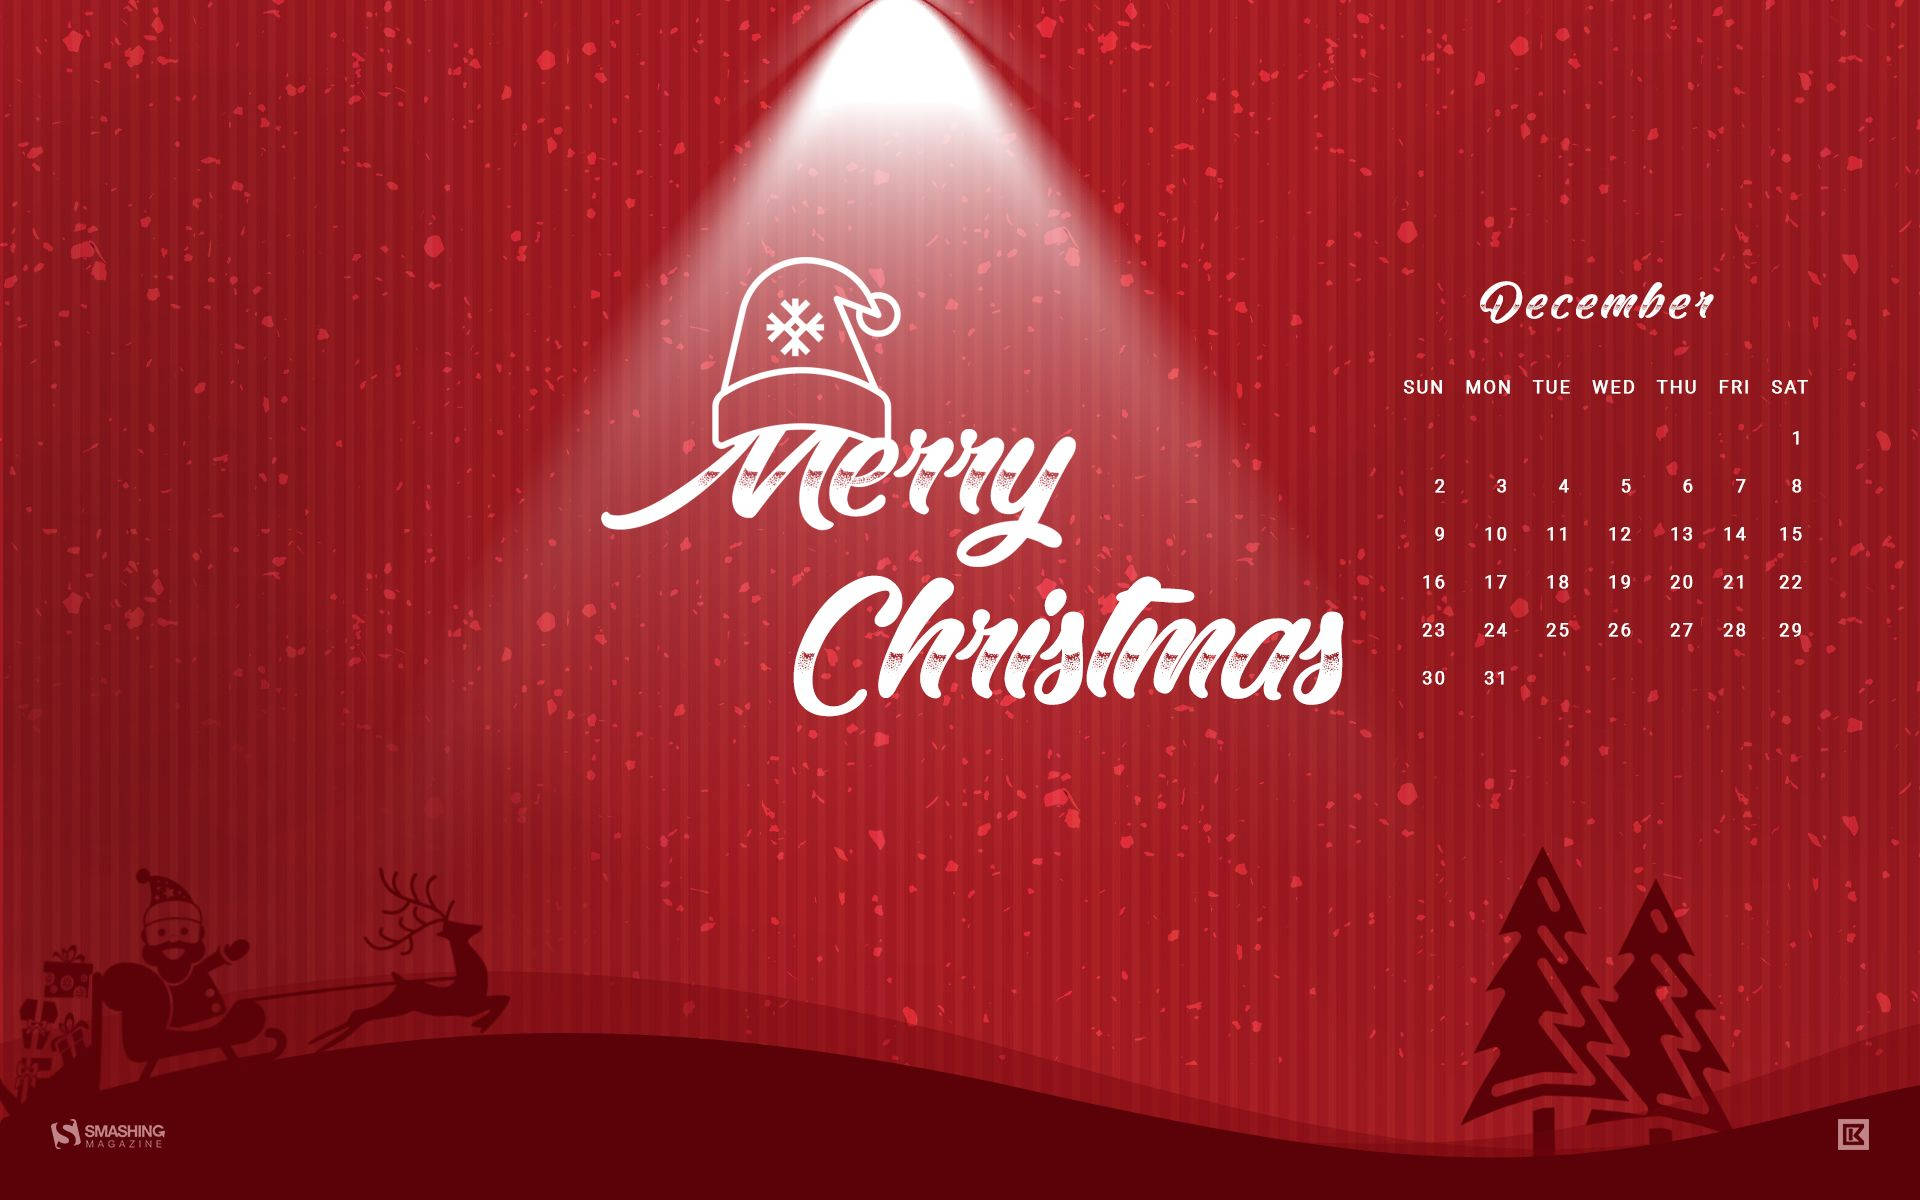 December Red Christmas Calendar